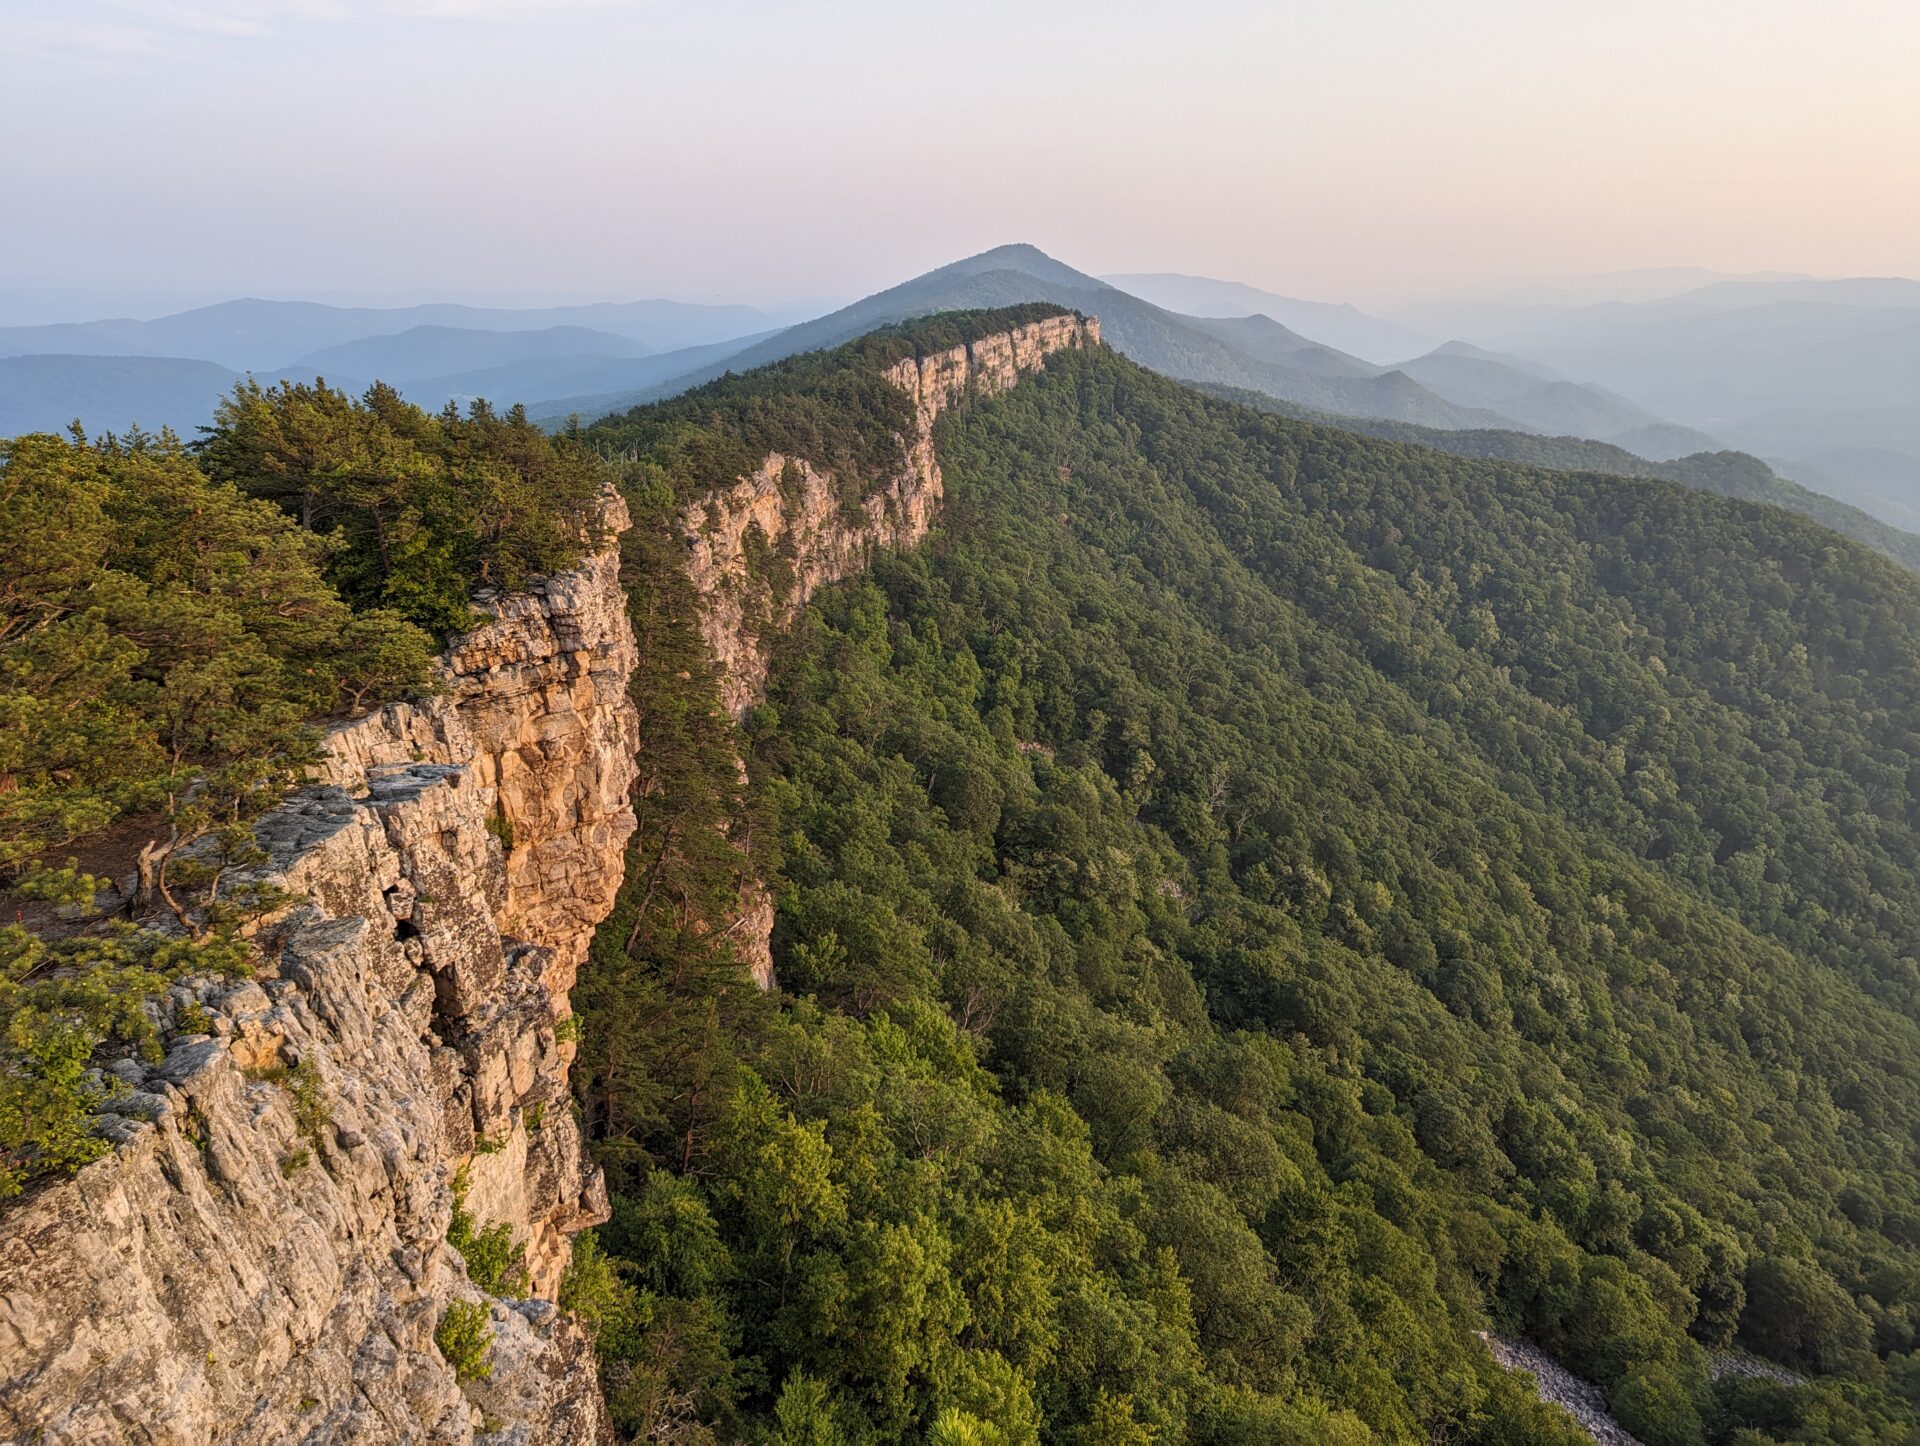 Best view of Chimney Top, West Virginia